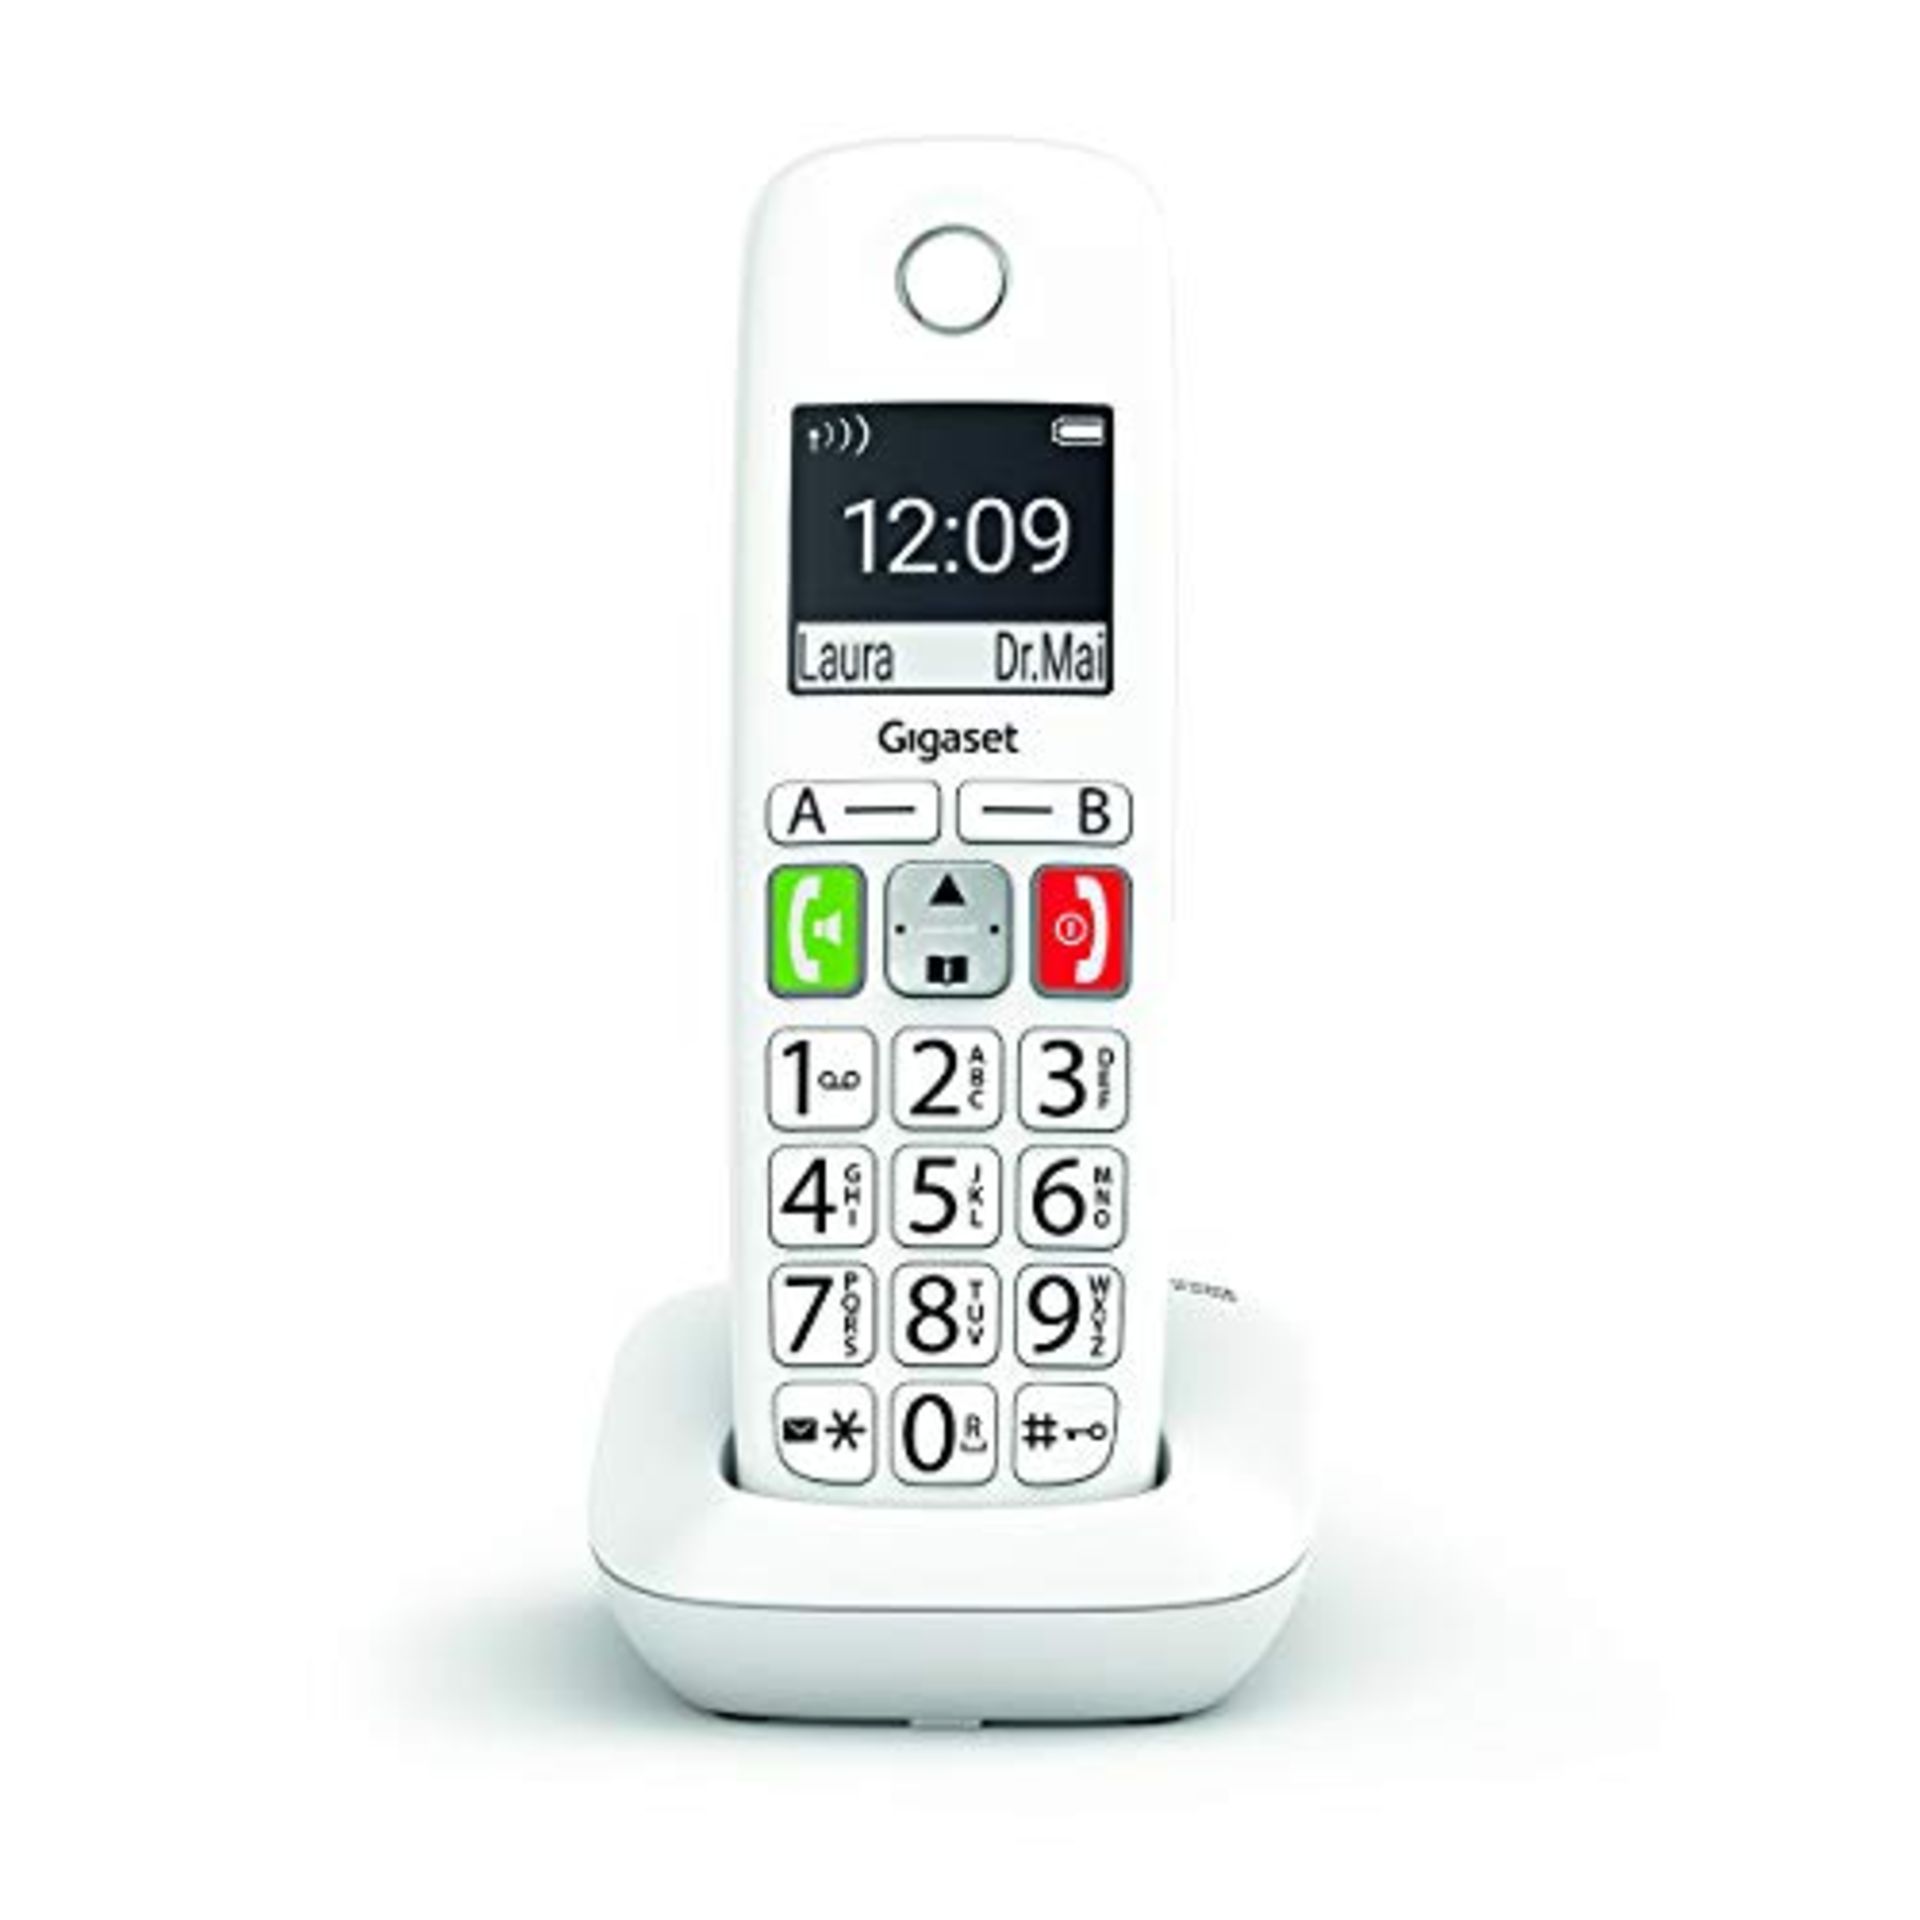 Gigaset E290 - Cordless phone for seniors with large keys, direct access keys for impo